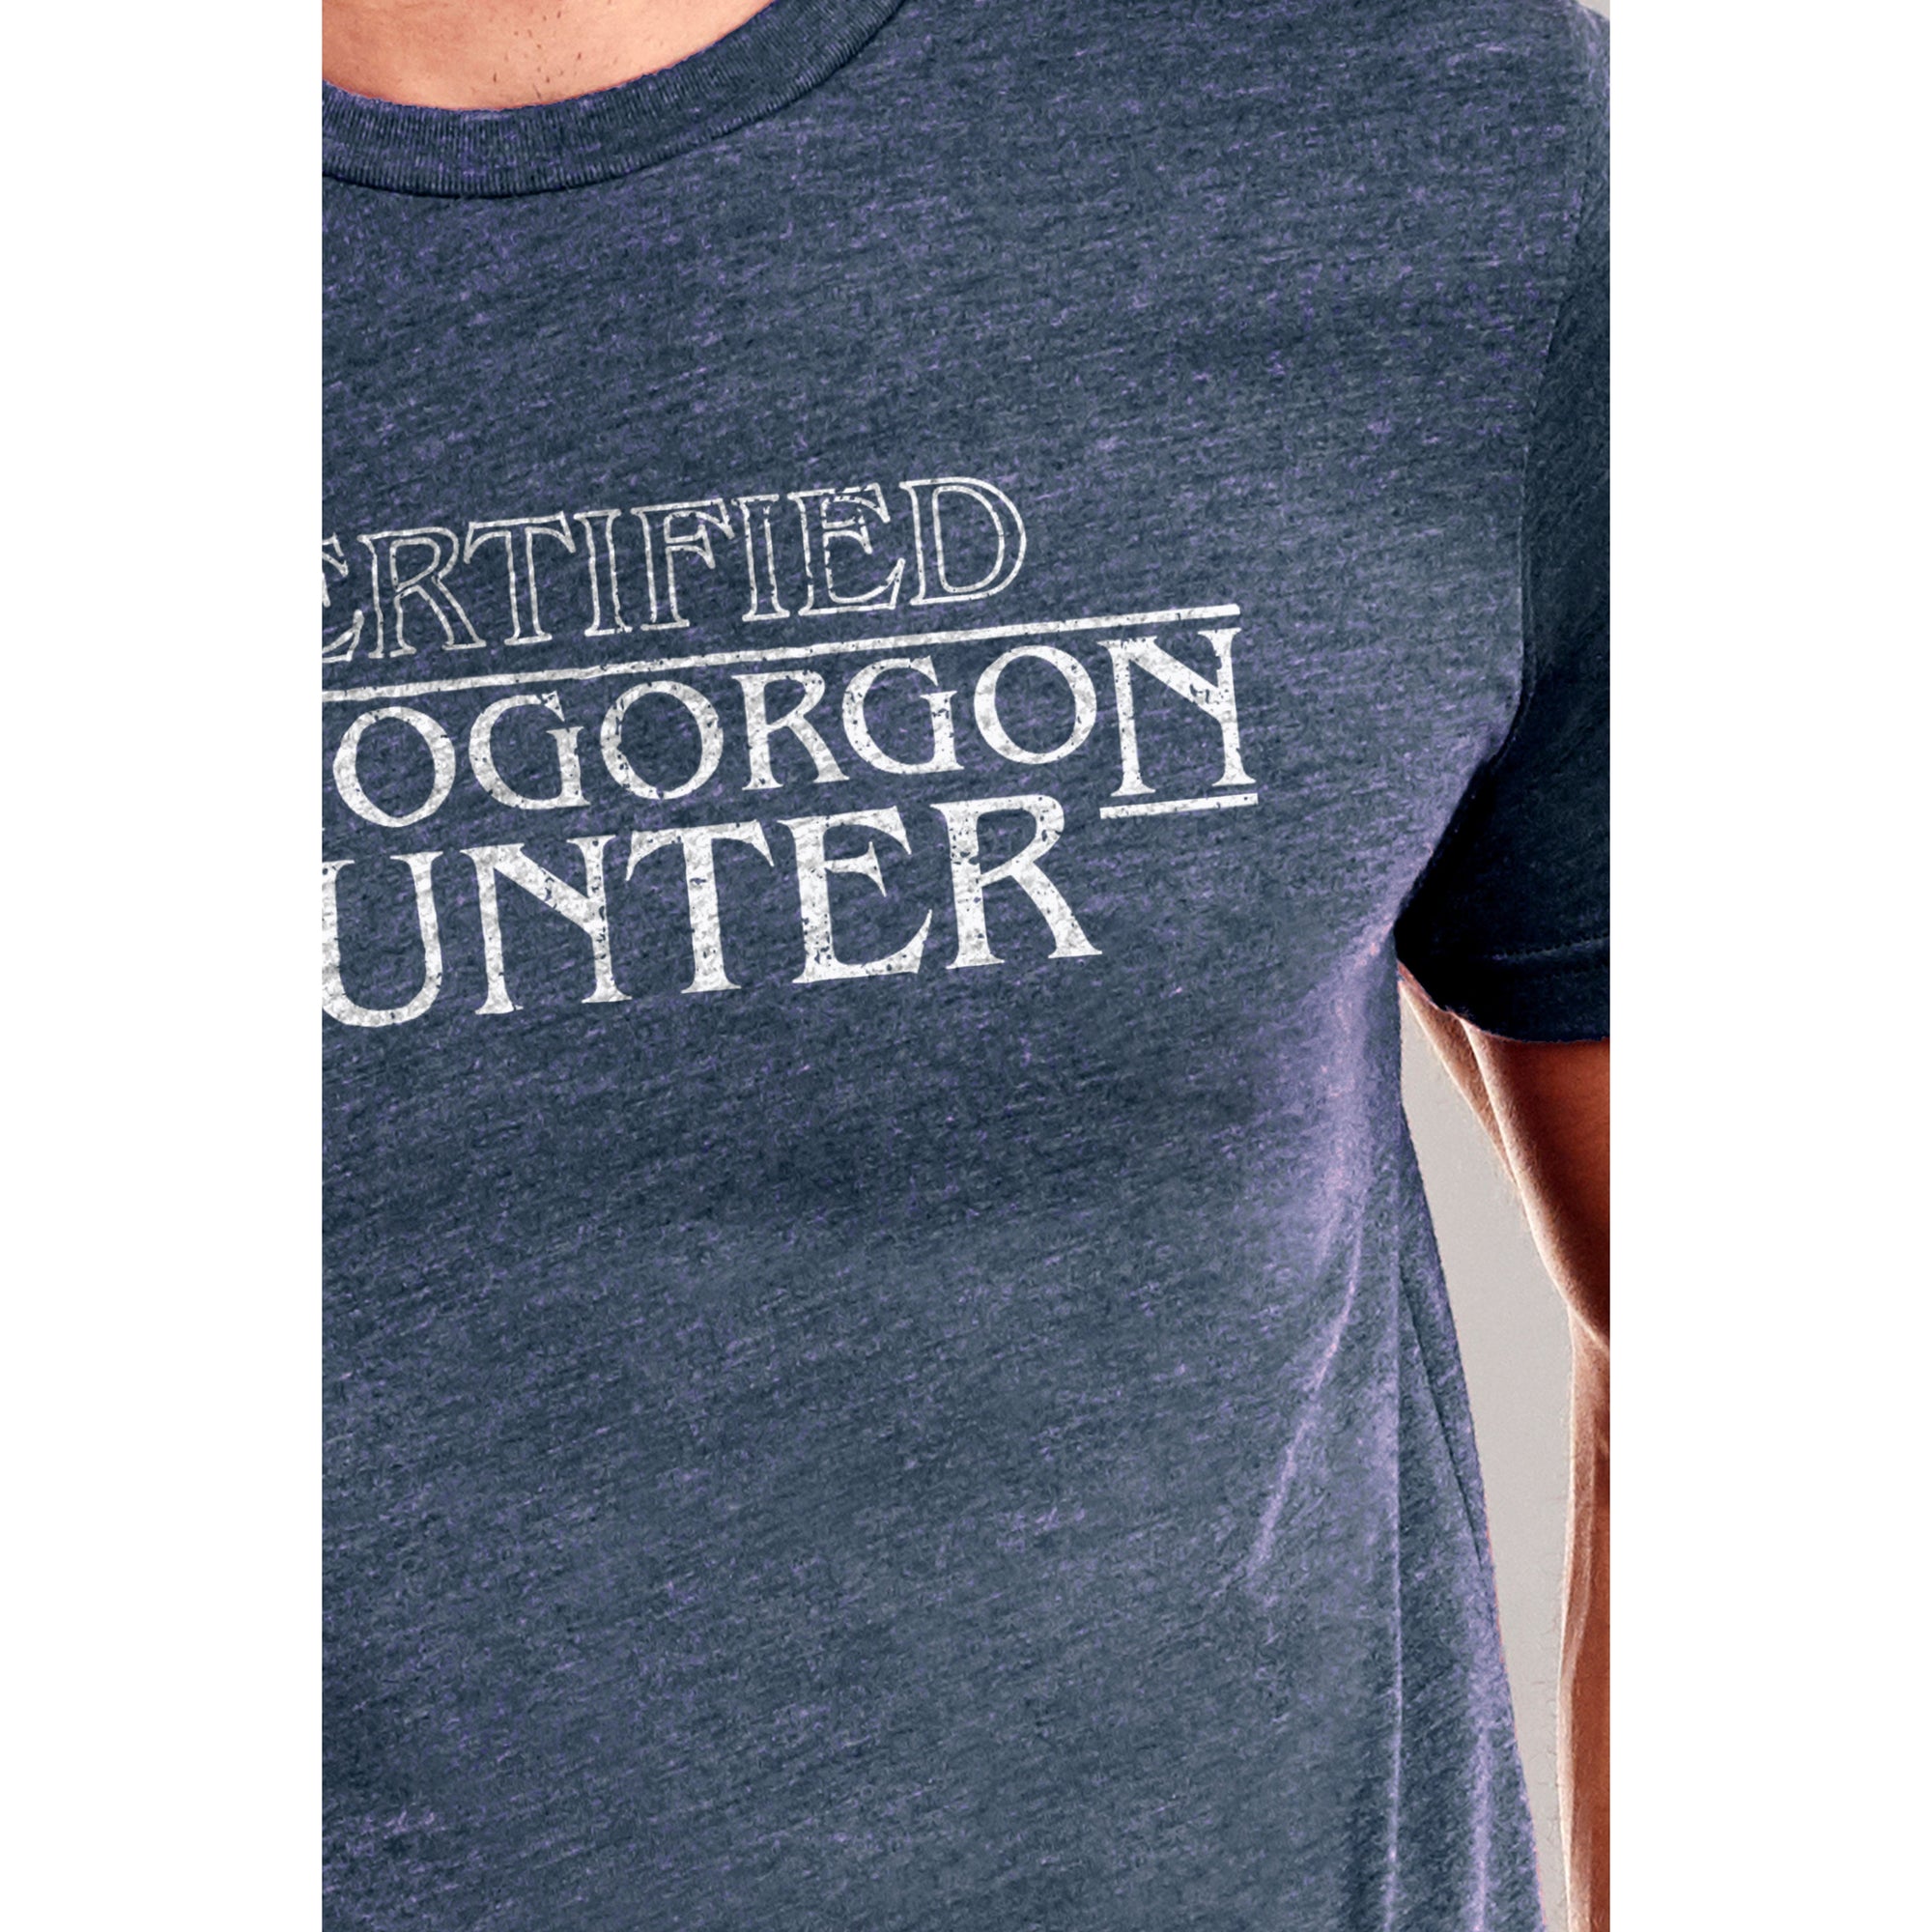 Certified Demogorgon Hunter Printed Graphic Men's Crew T-Shirt Vintage White Closeup Image